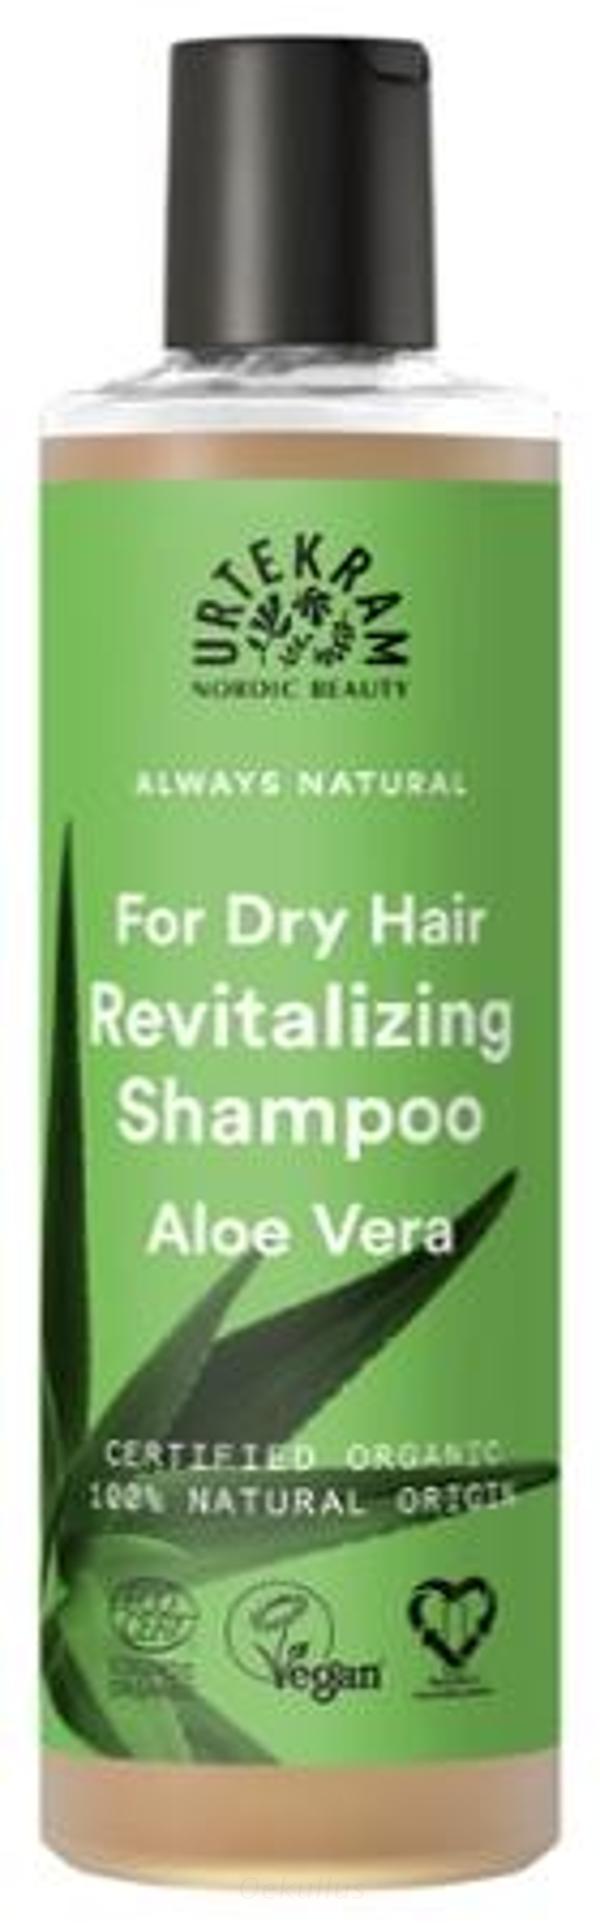 Produktfoto zu Aloe Vera Shampoo